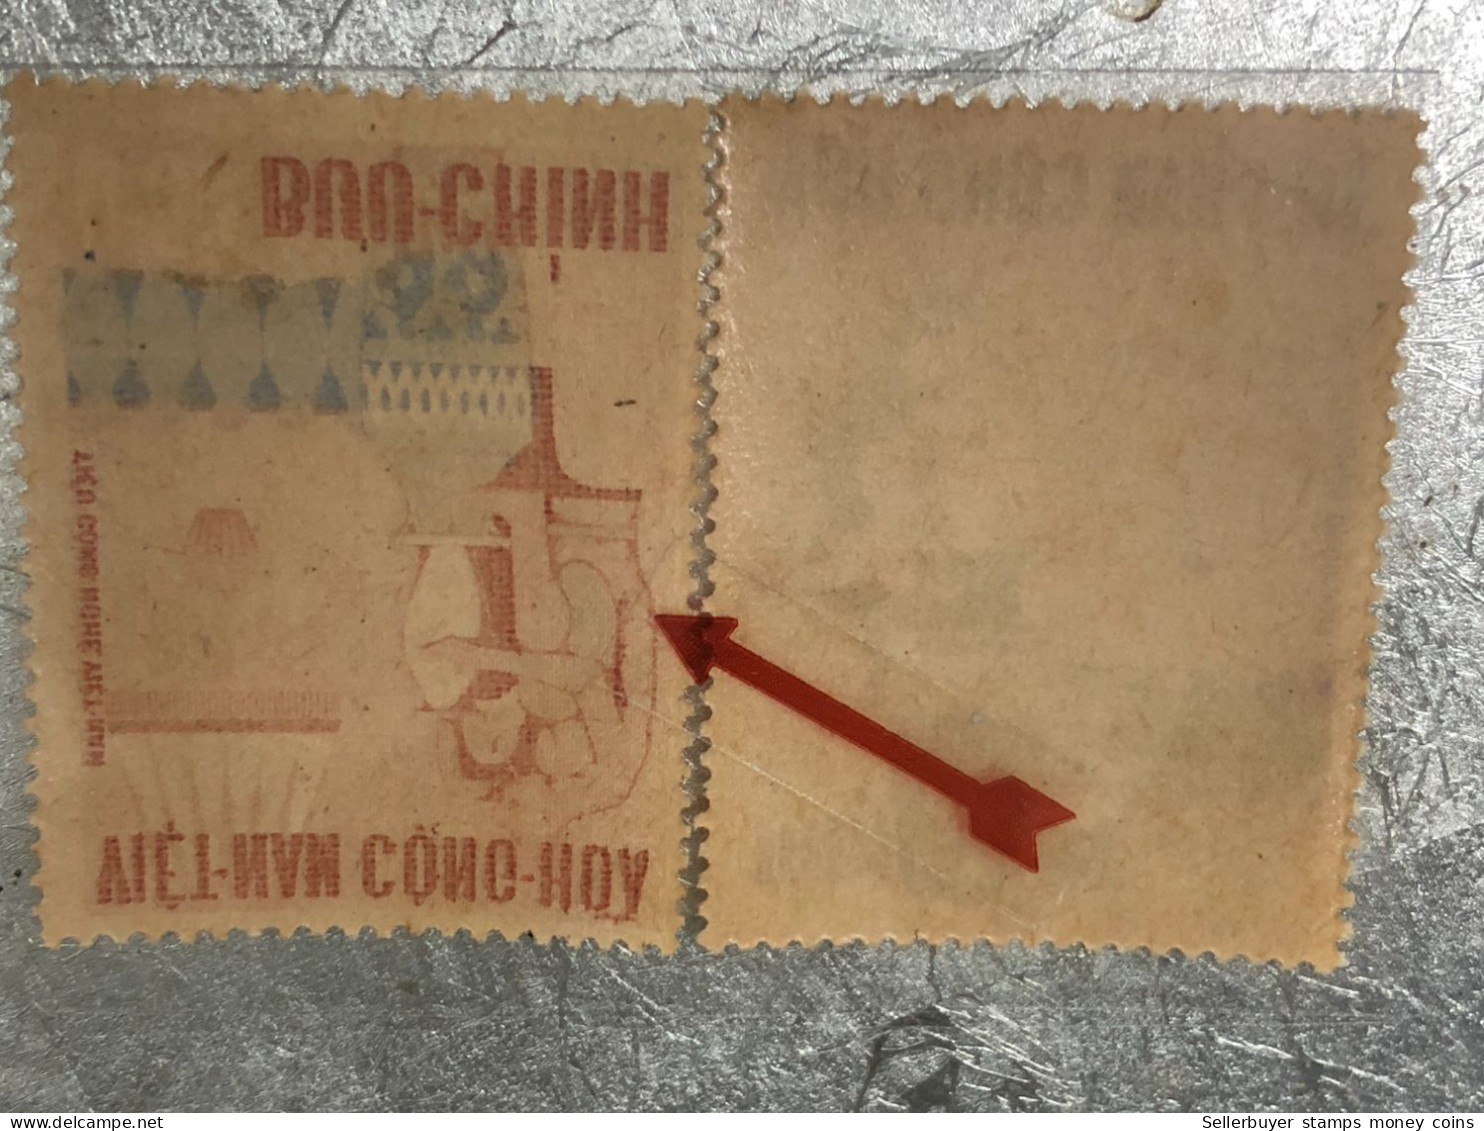 SOUTH VIETNAM Stamps(1967-ARTISANAT-3d) Piled ERROR(imprinted)-1 STAMPS Vyre Rare - Vietnam